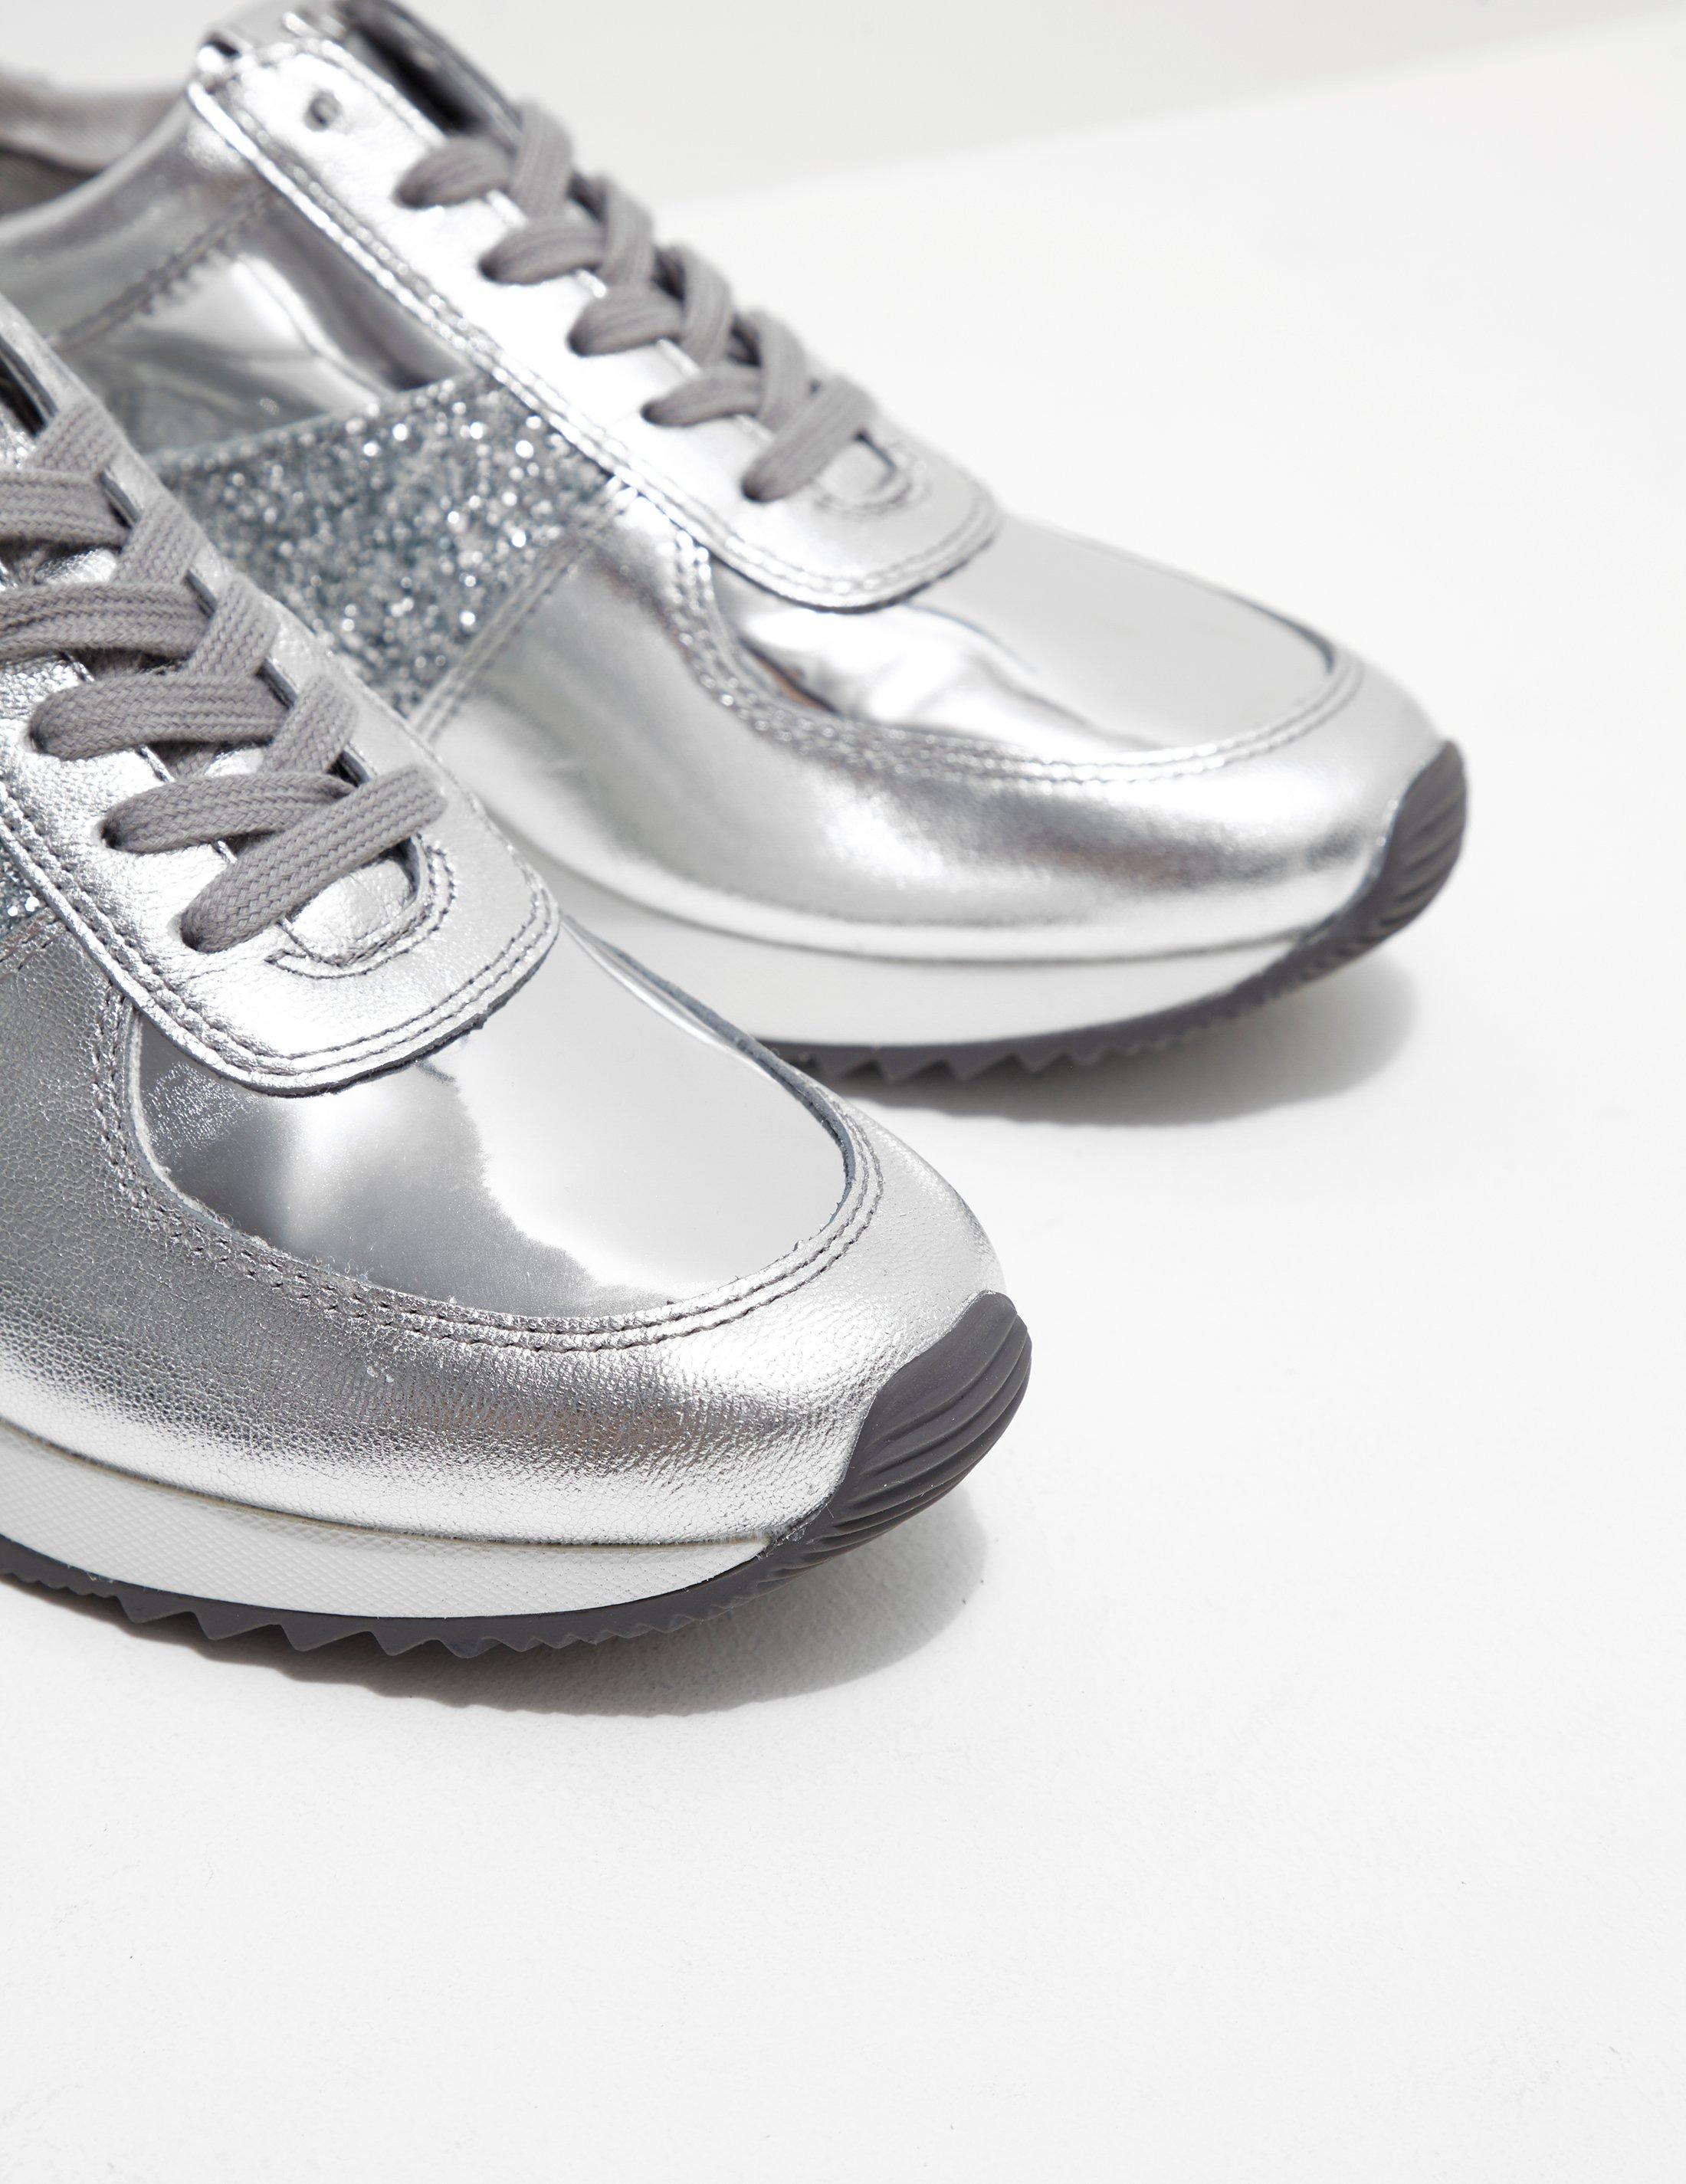 Michael Kors Womens Allie Wrap Trainer Silver in Metallic - Lyst